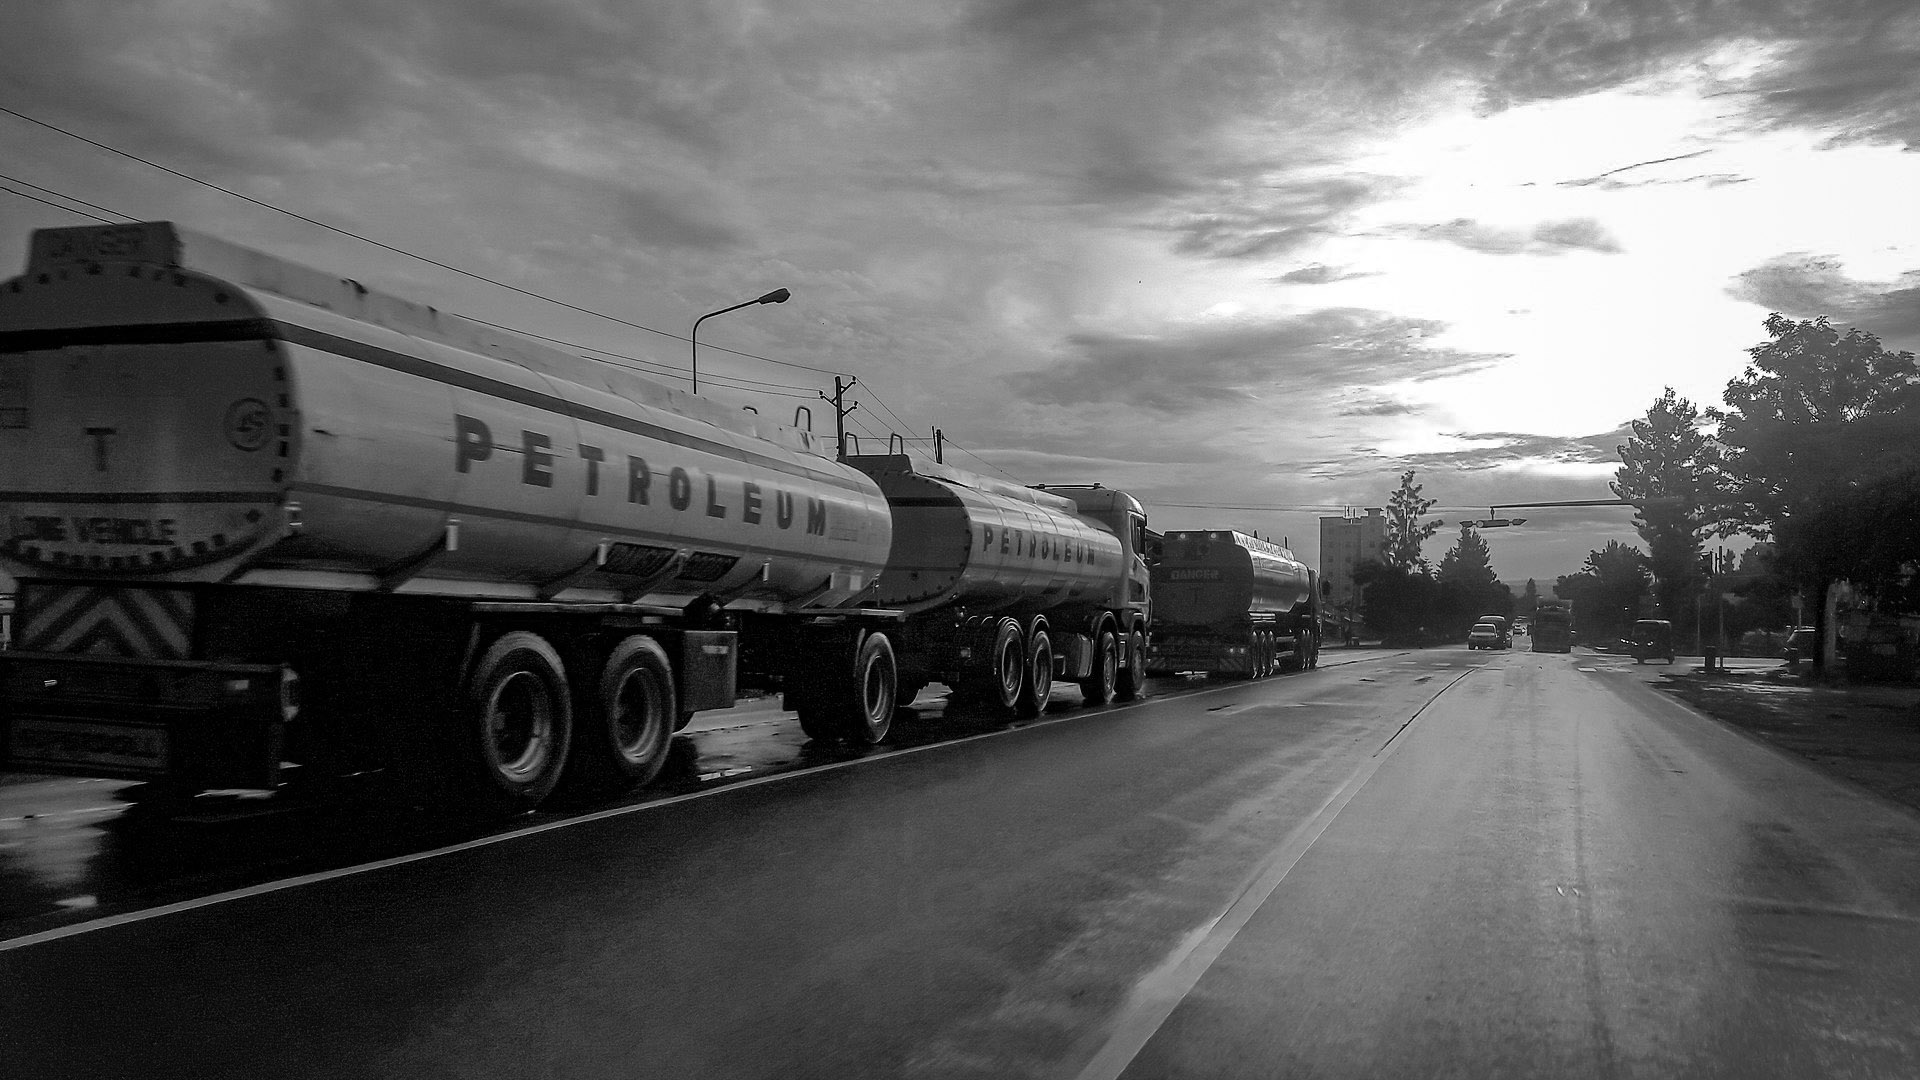 Petroleum trucks strolling through the city of Mbeya